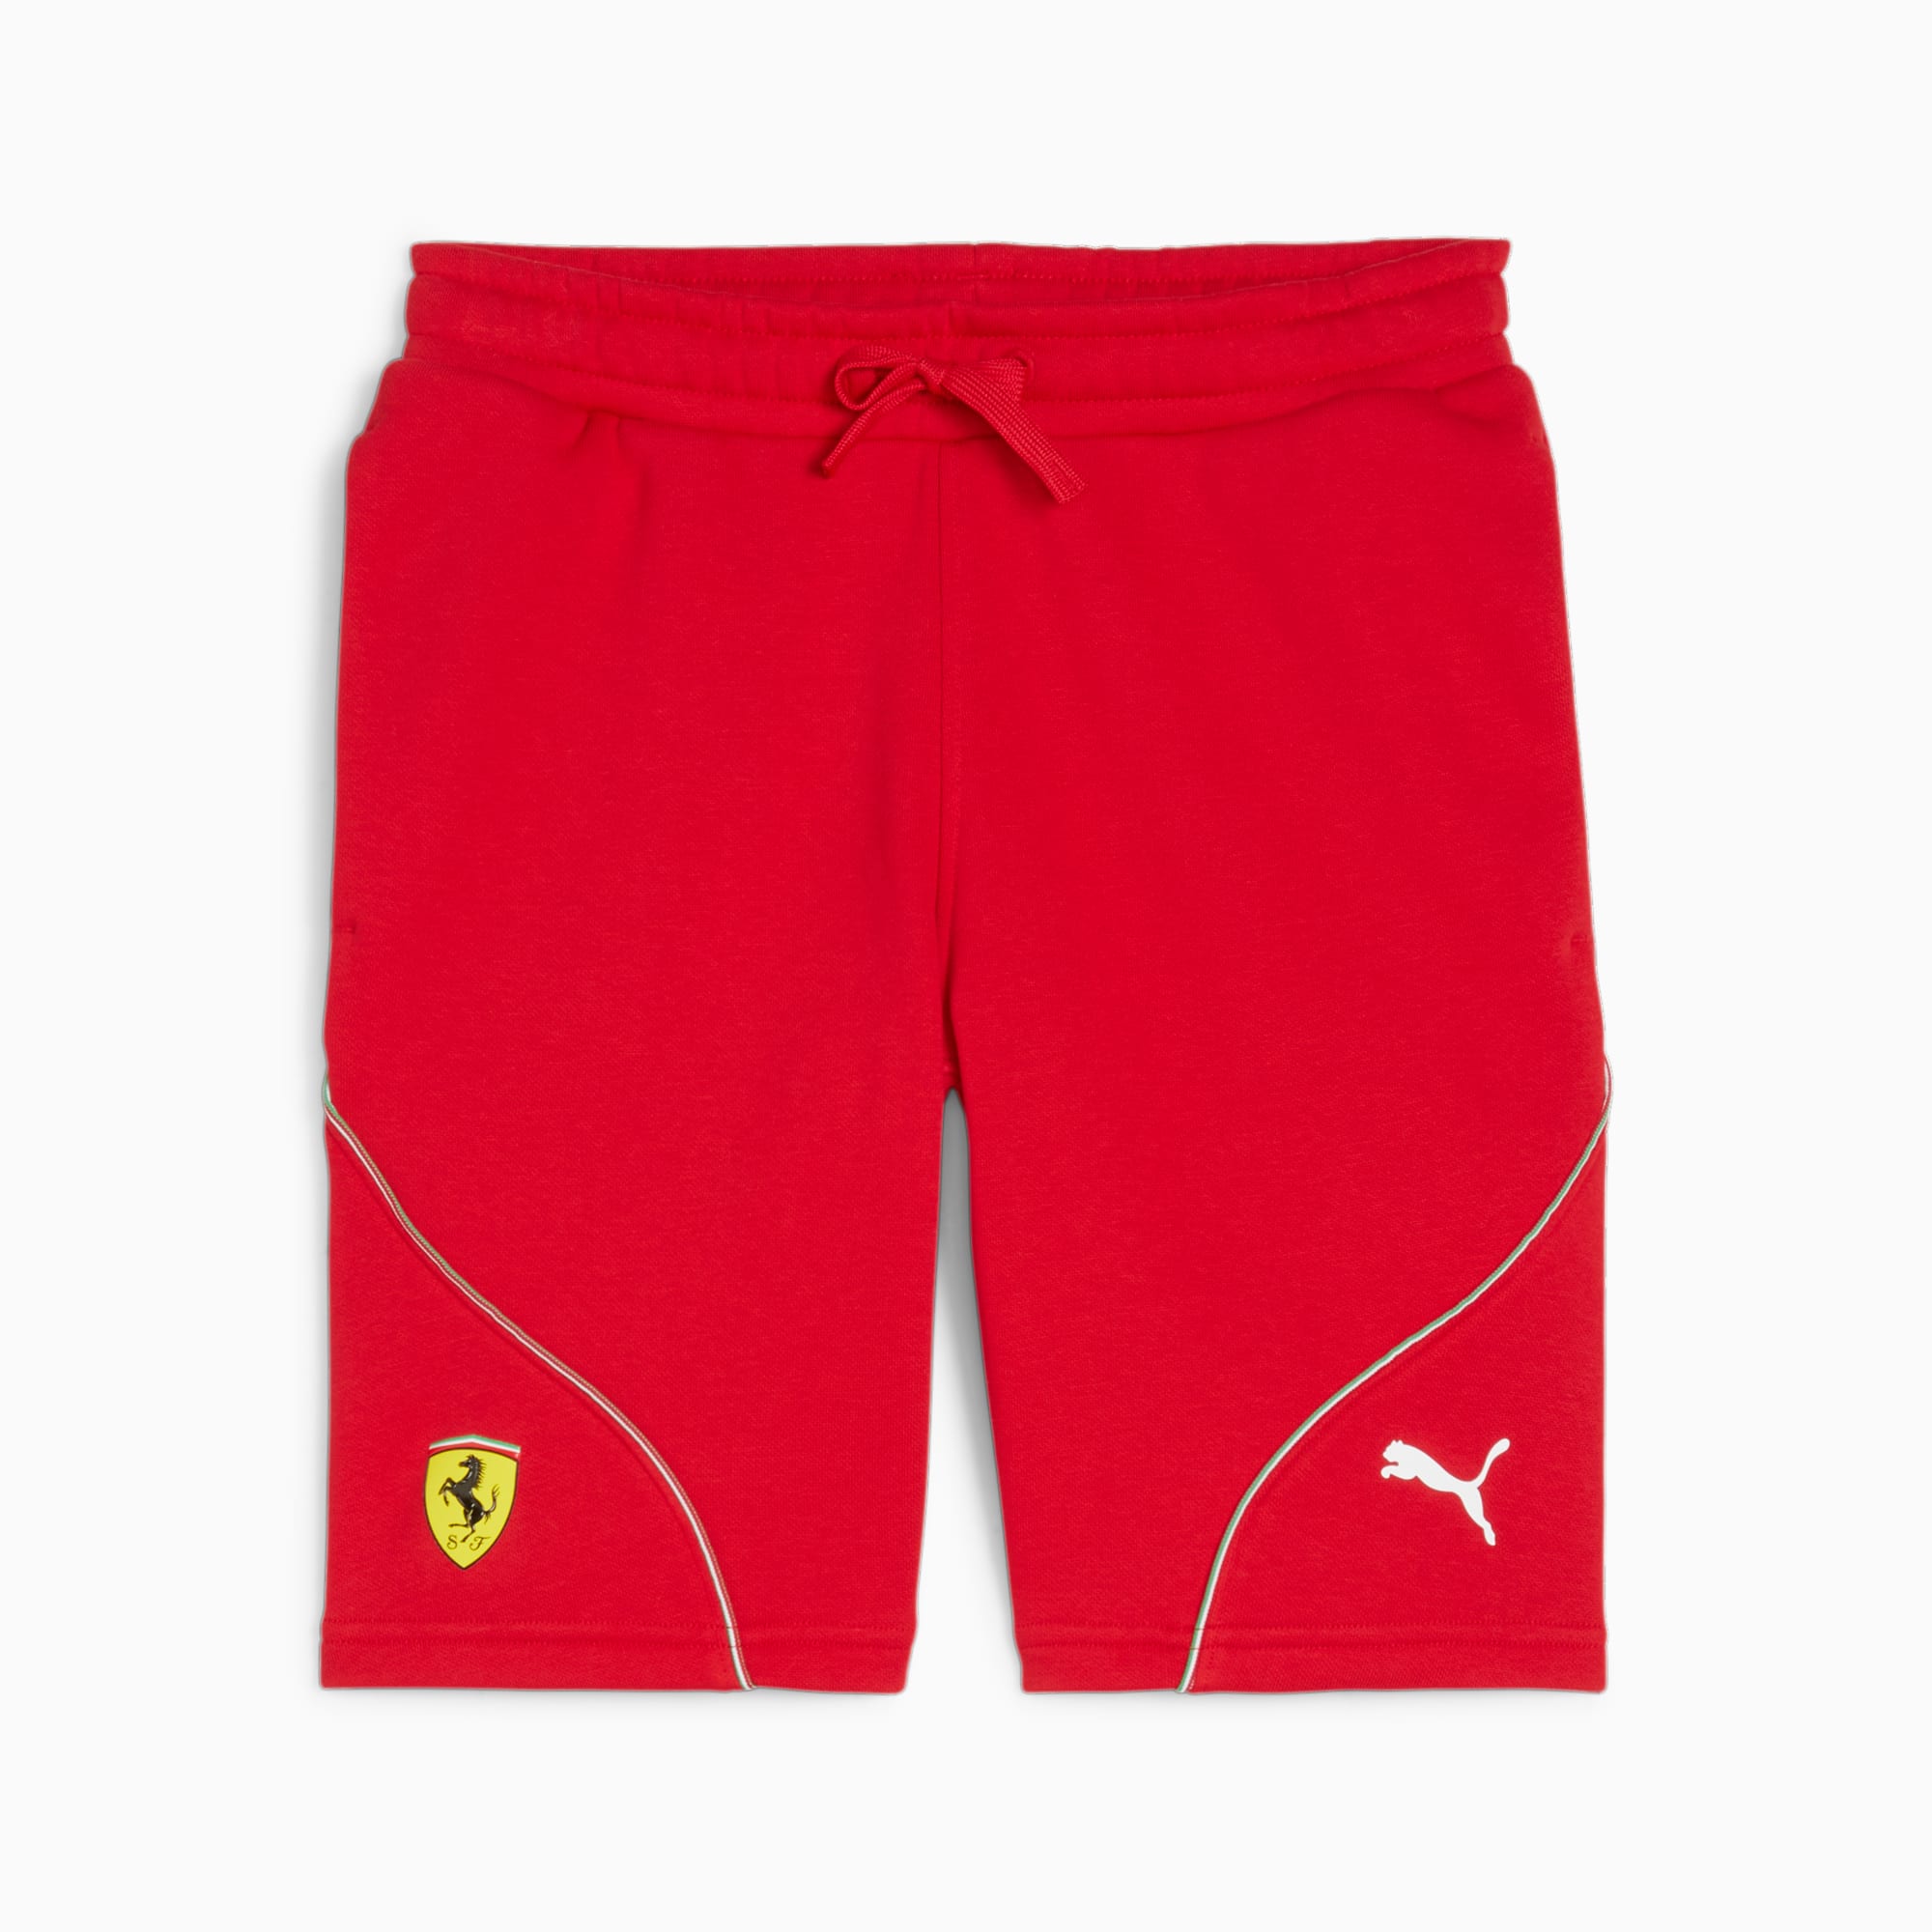 PUMA Scuderia Ferrari Race Youth Motorsport Shorts, Red, Size 116, Clothing